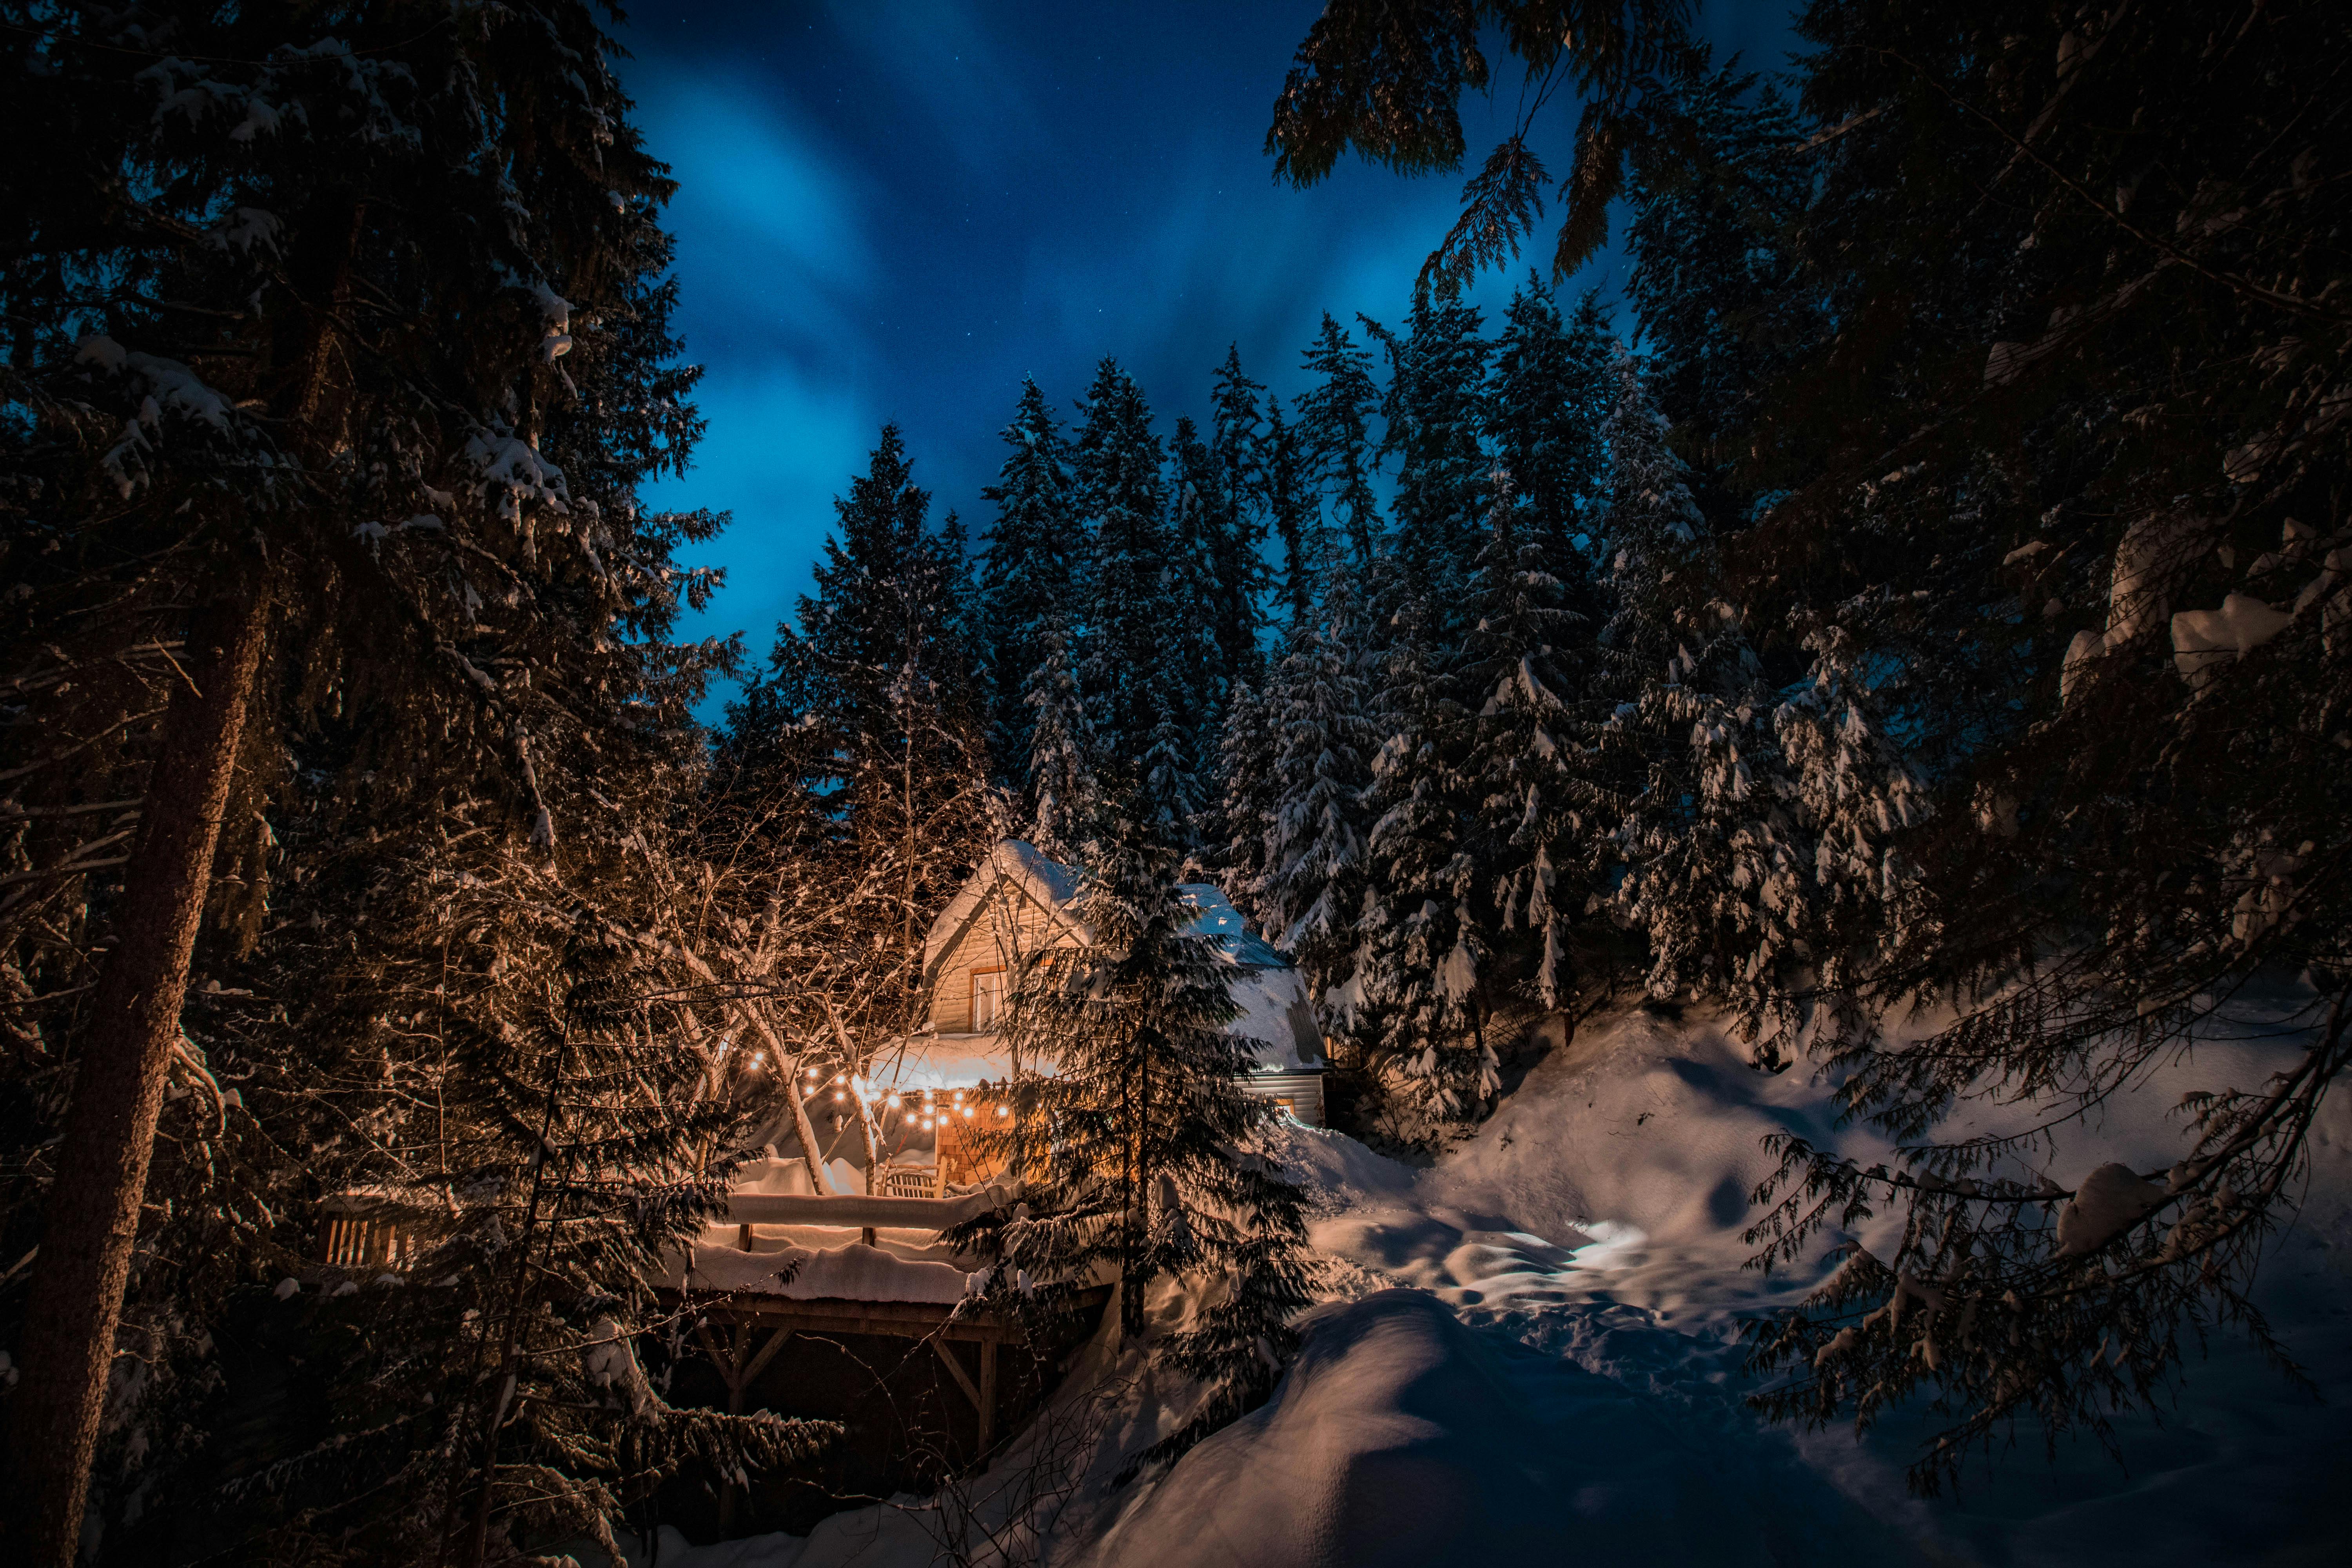 Winter Night Photos, Download The BEST Free Winter Night Stock